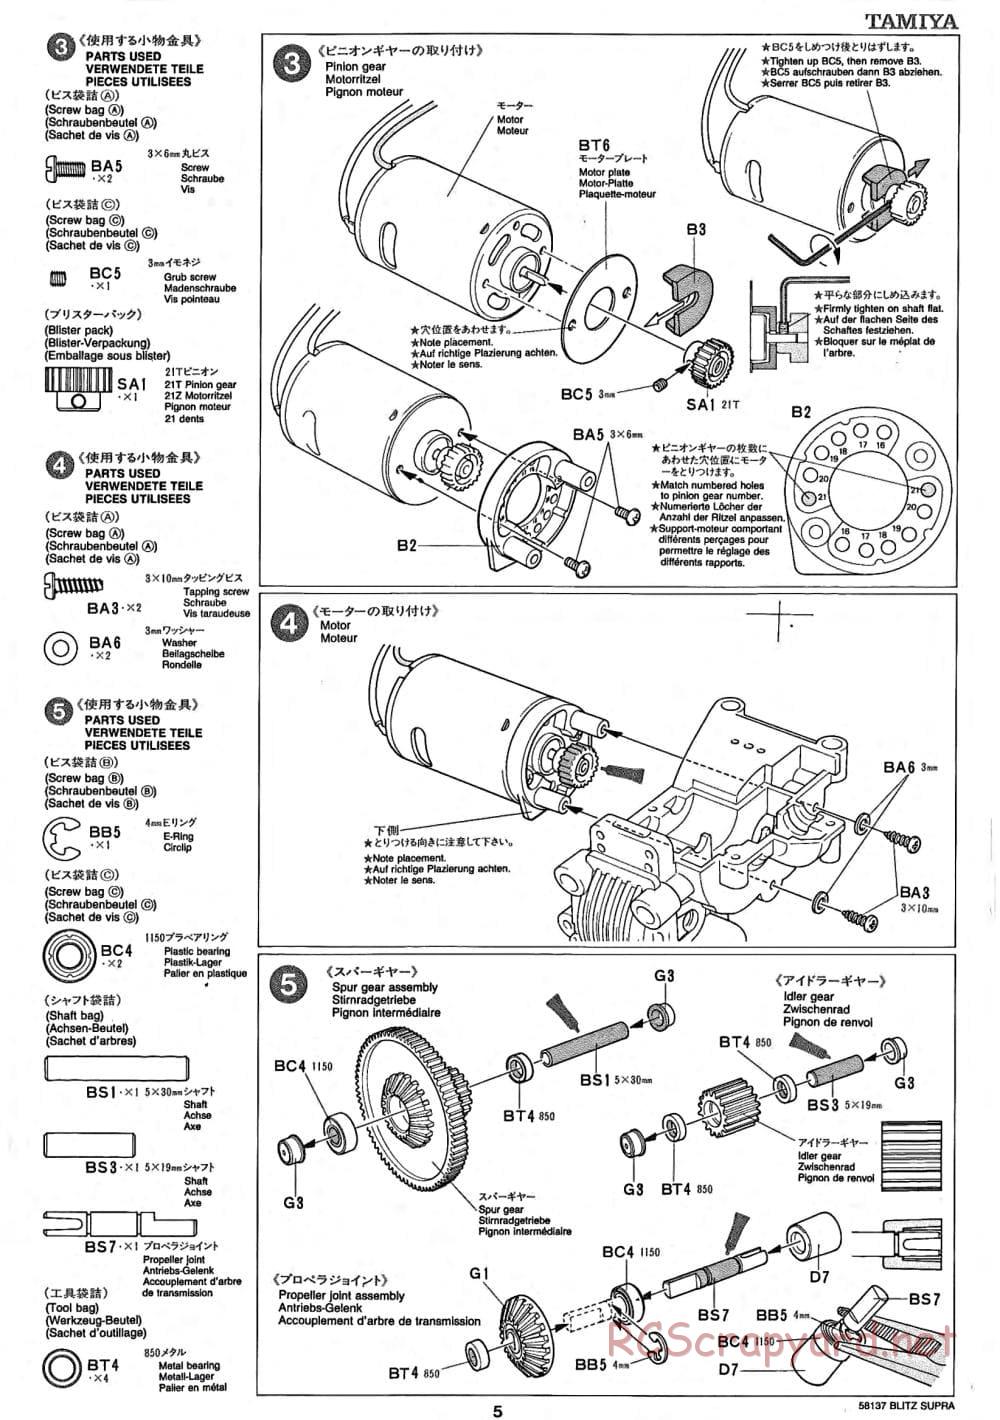 Tamiya - Blitz Toyota Supra Gr.N - TA-02 Chassis - Manual - Page 5